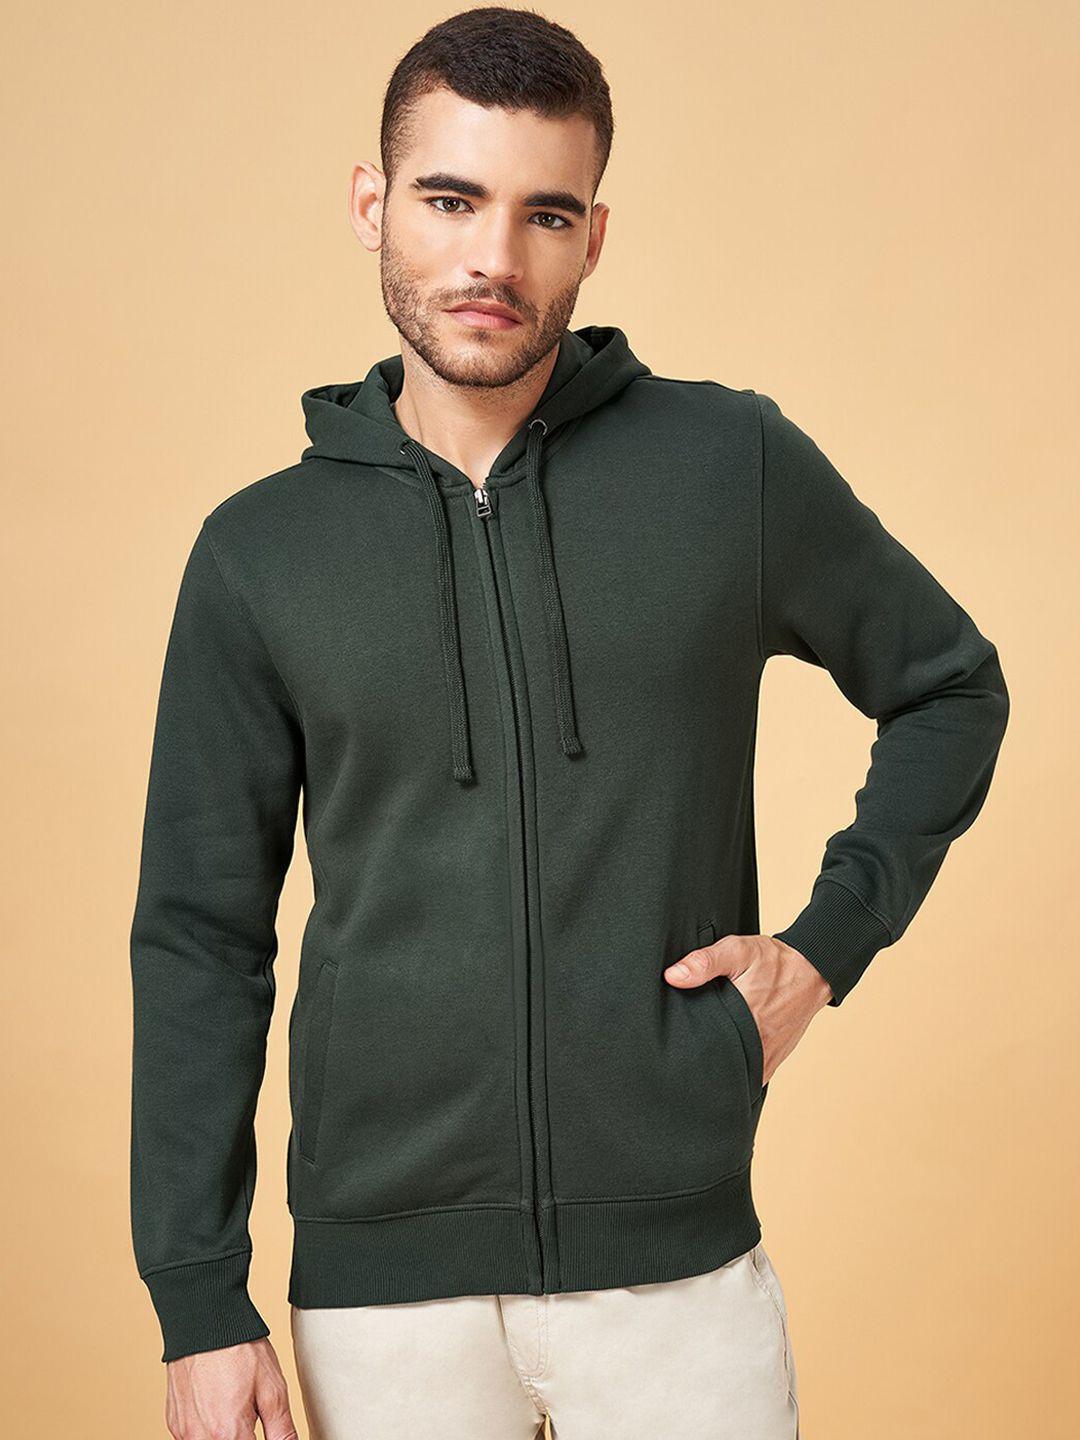 urban-ranger-by-pantaloons-hood-cotton-front-open-sweatshirt